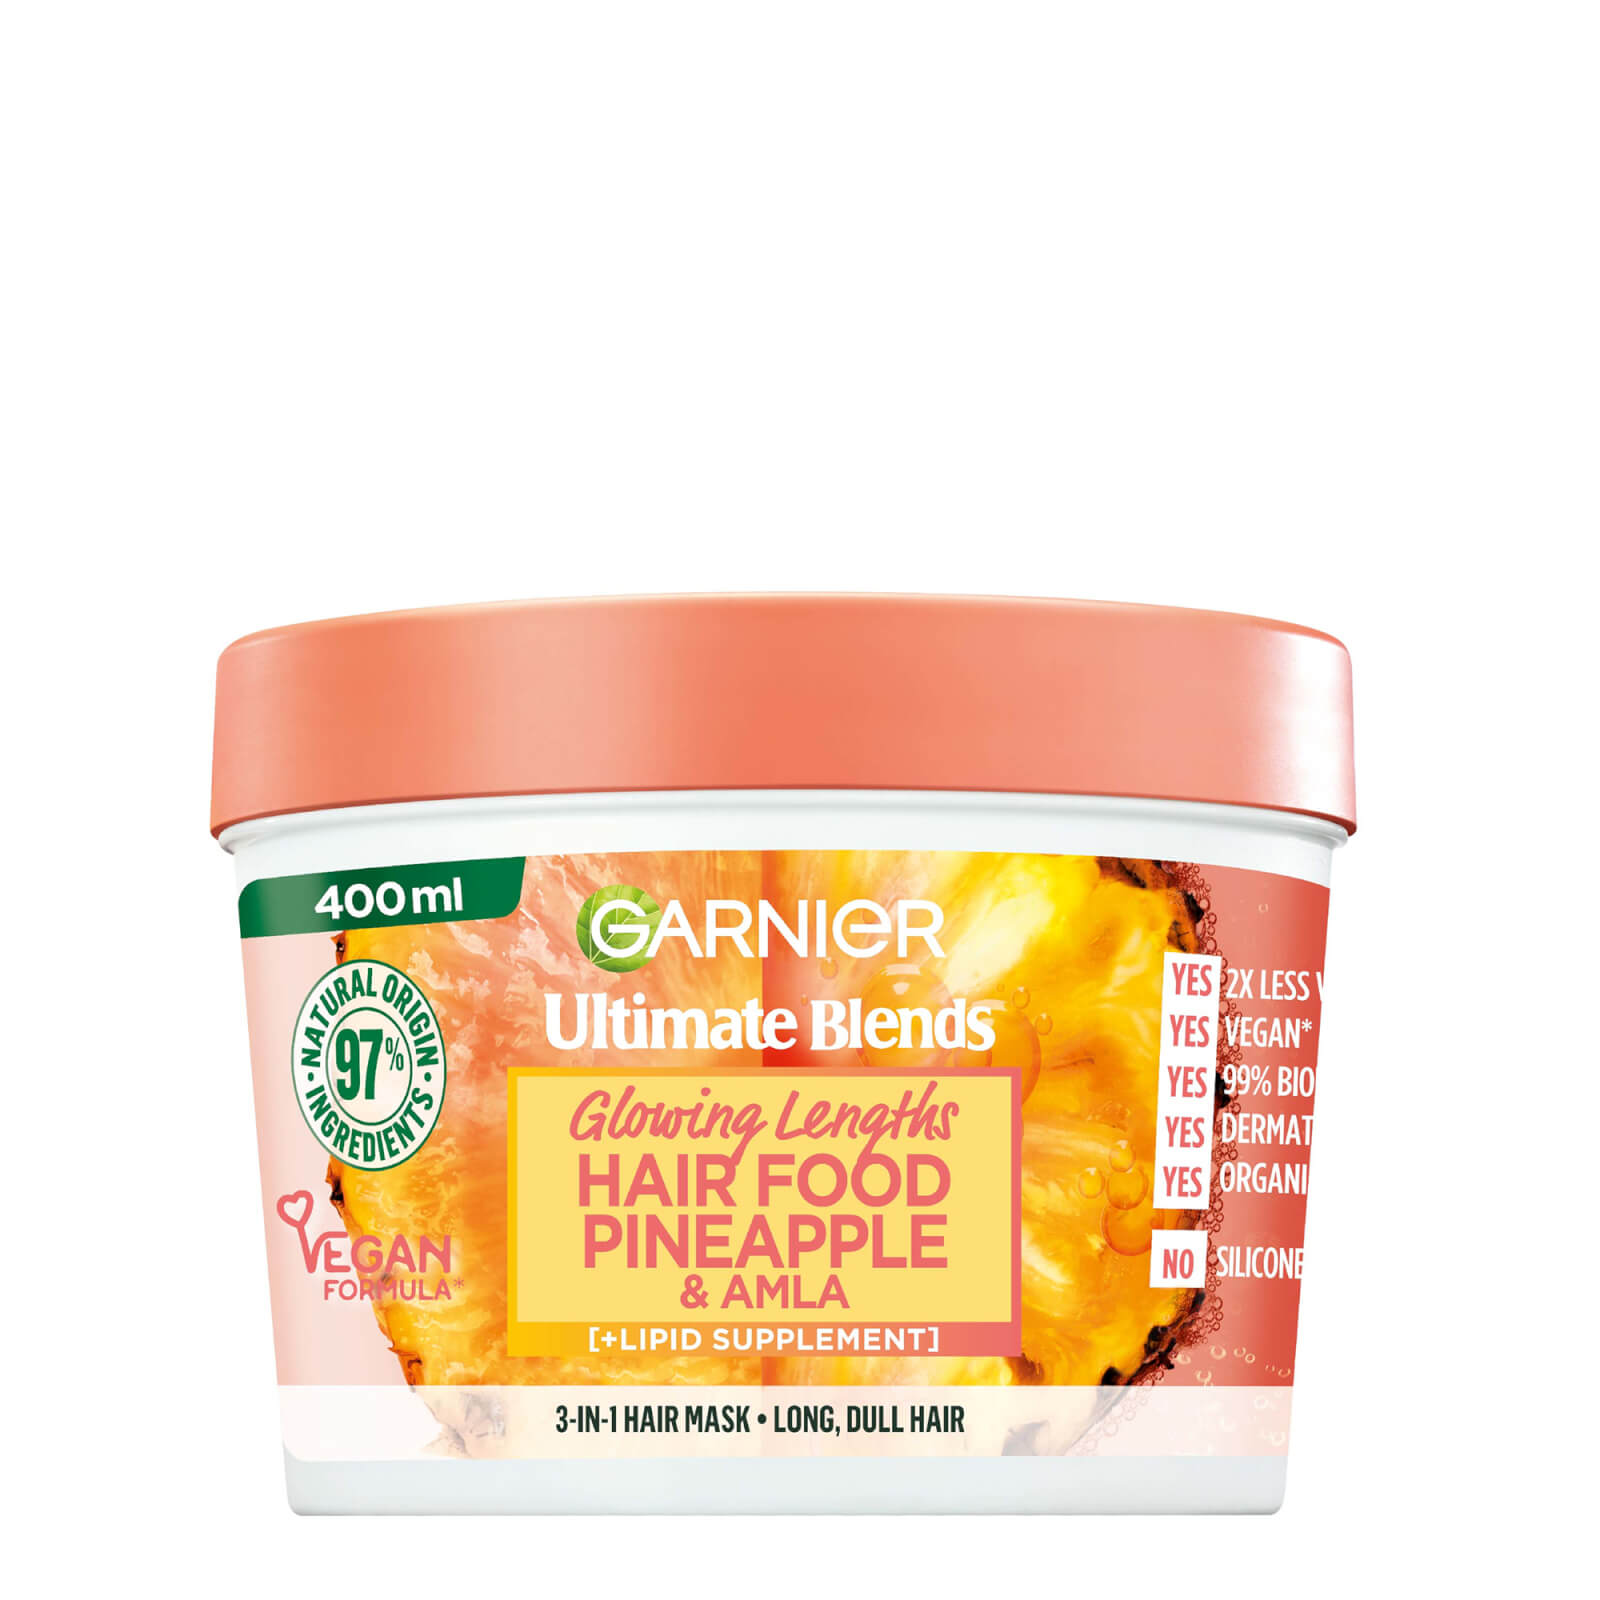 Garnier Ultimate Blends Glowing Lengths Pineapple And Amla Hair Food 3-in-1 Hair Mask Treatment 400ml In White